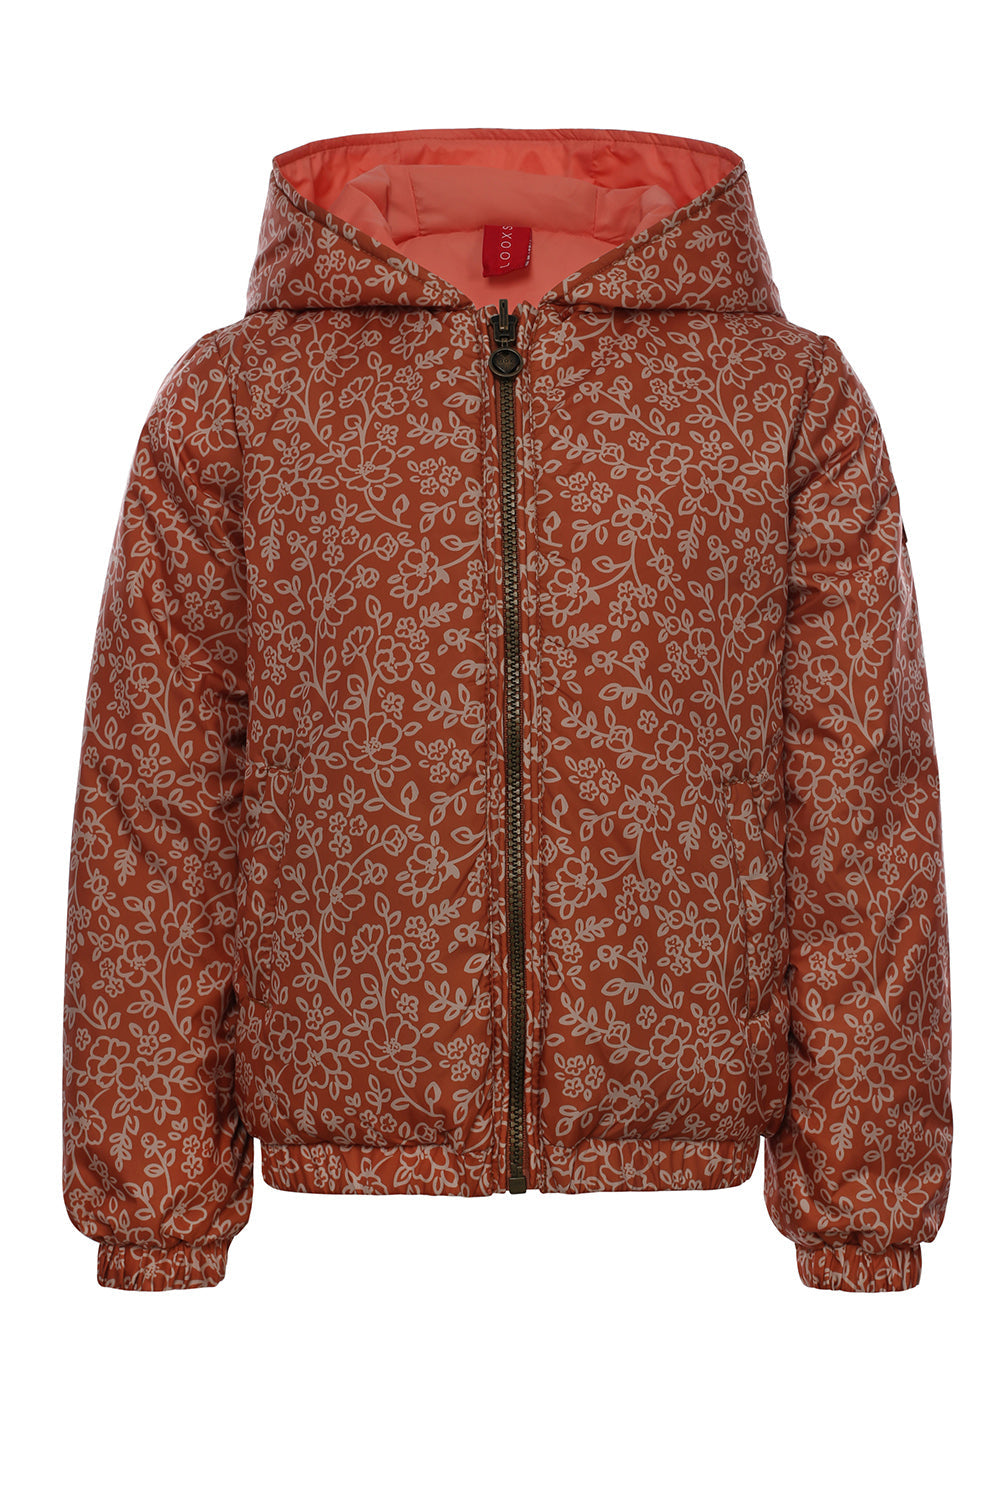 Meisjes Outerwear Jacket van LOOXS Little in de kleur Pecan Blossom AO in maat 128.